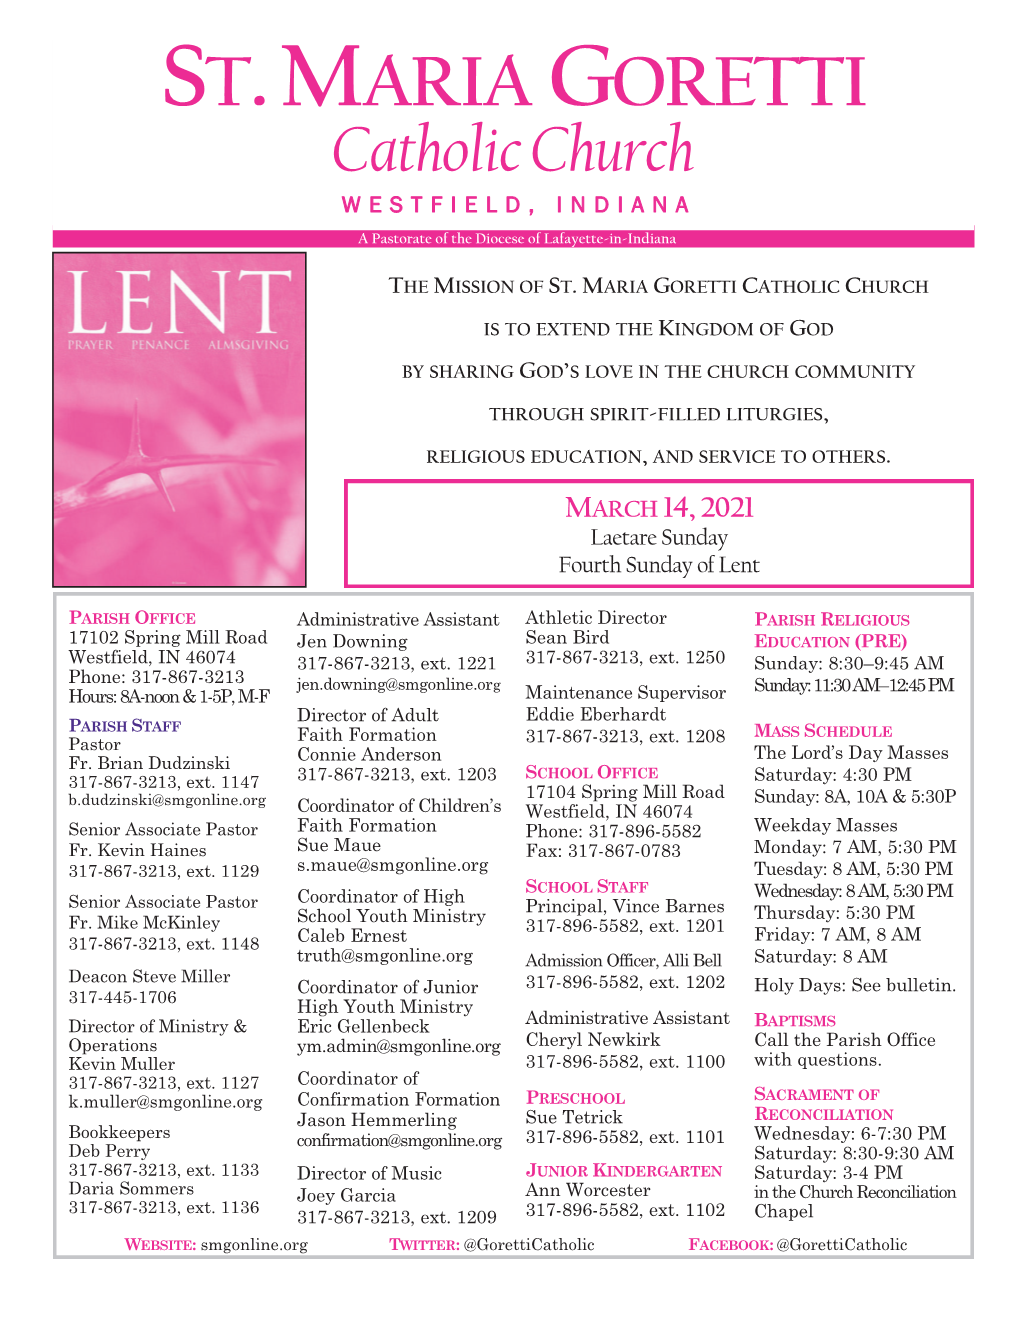 MARCH 14, 2021 Laetare Sunday Fourth Sunday of Lent